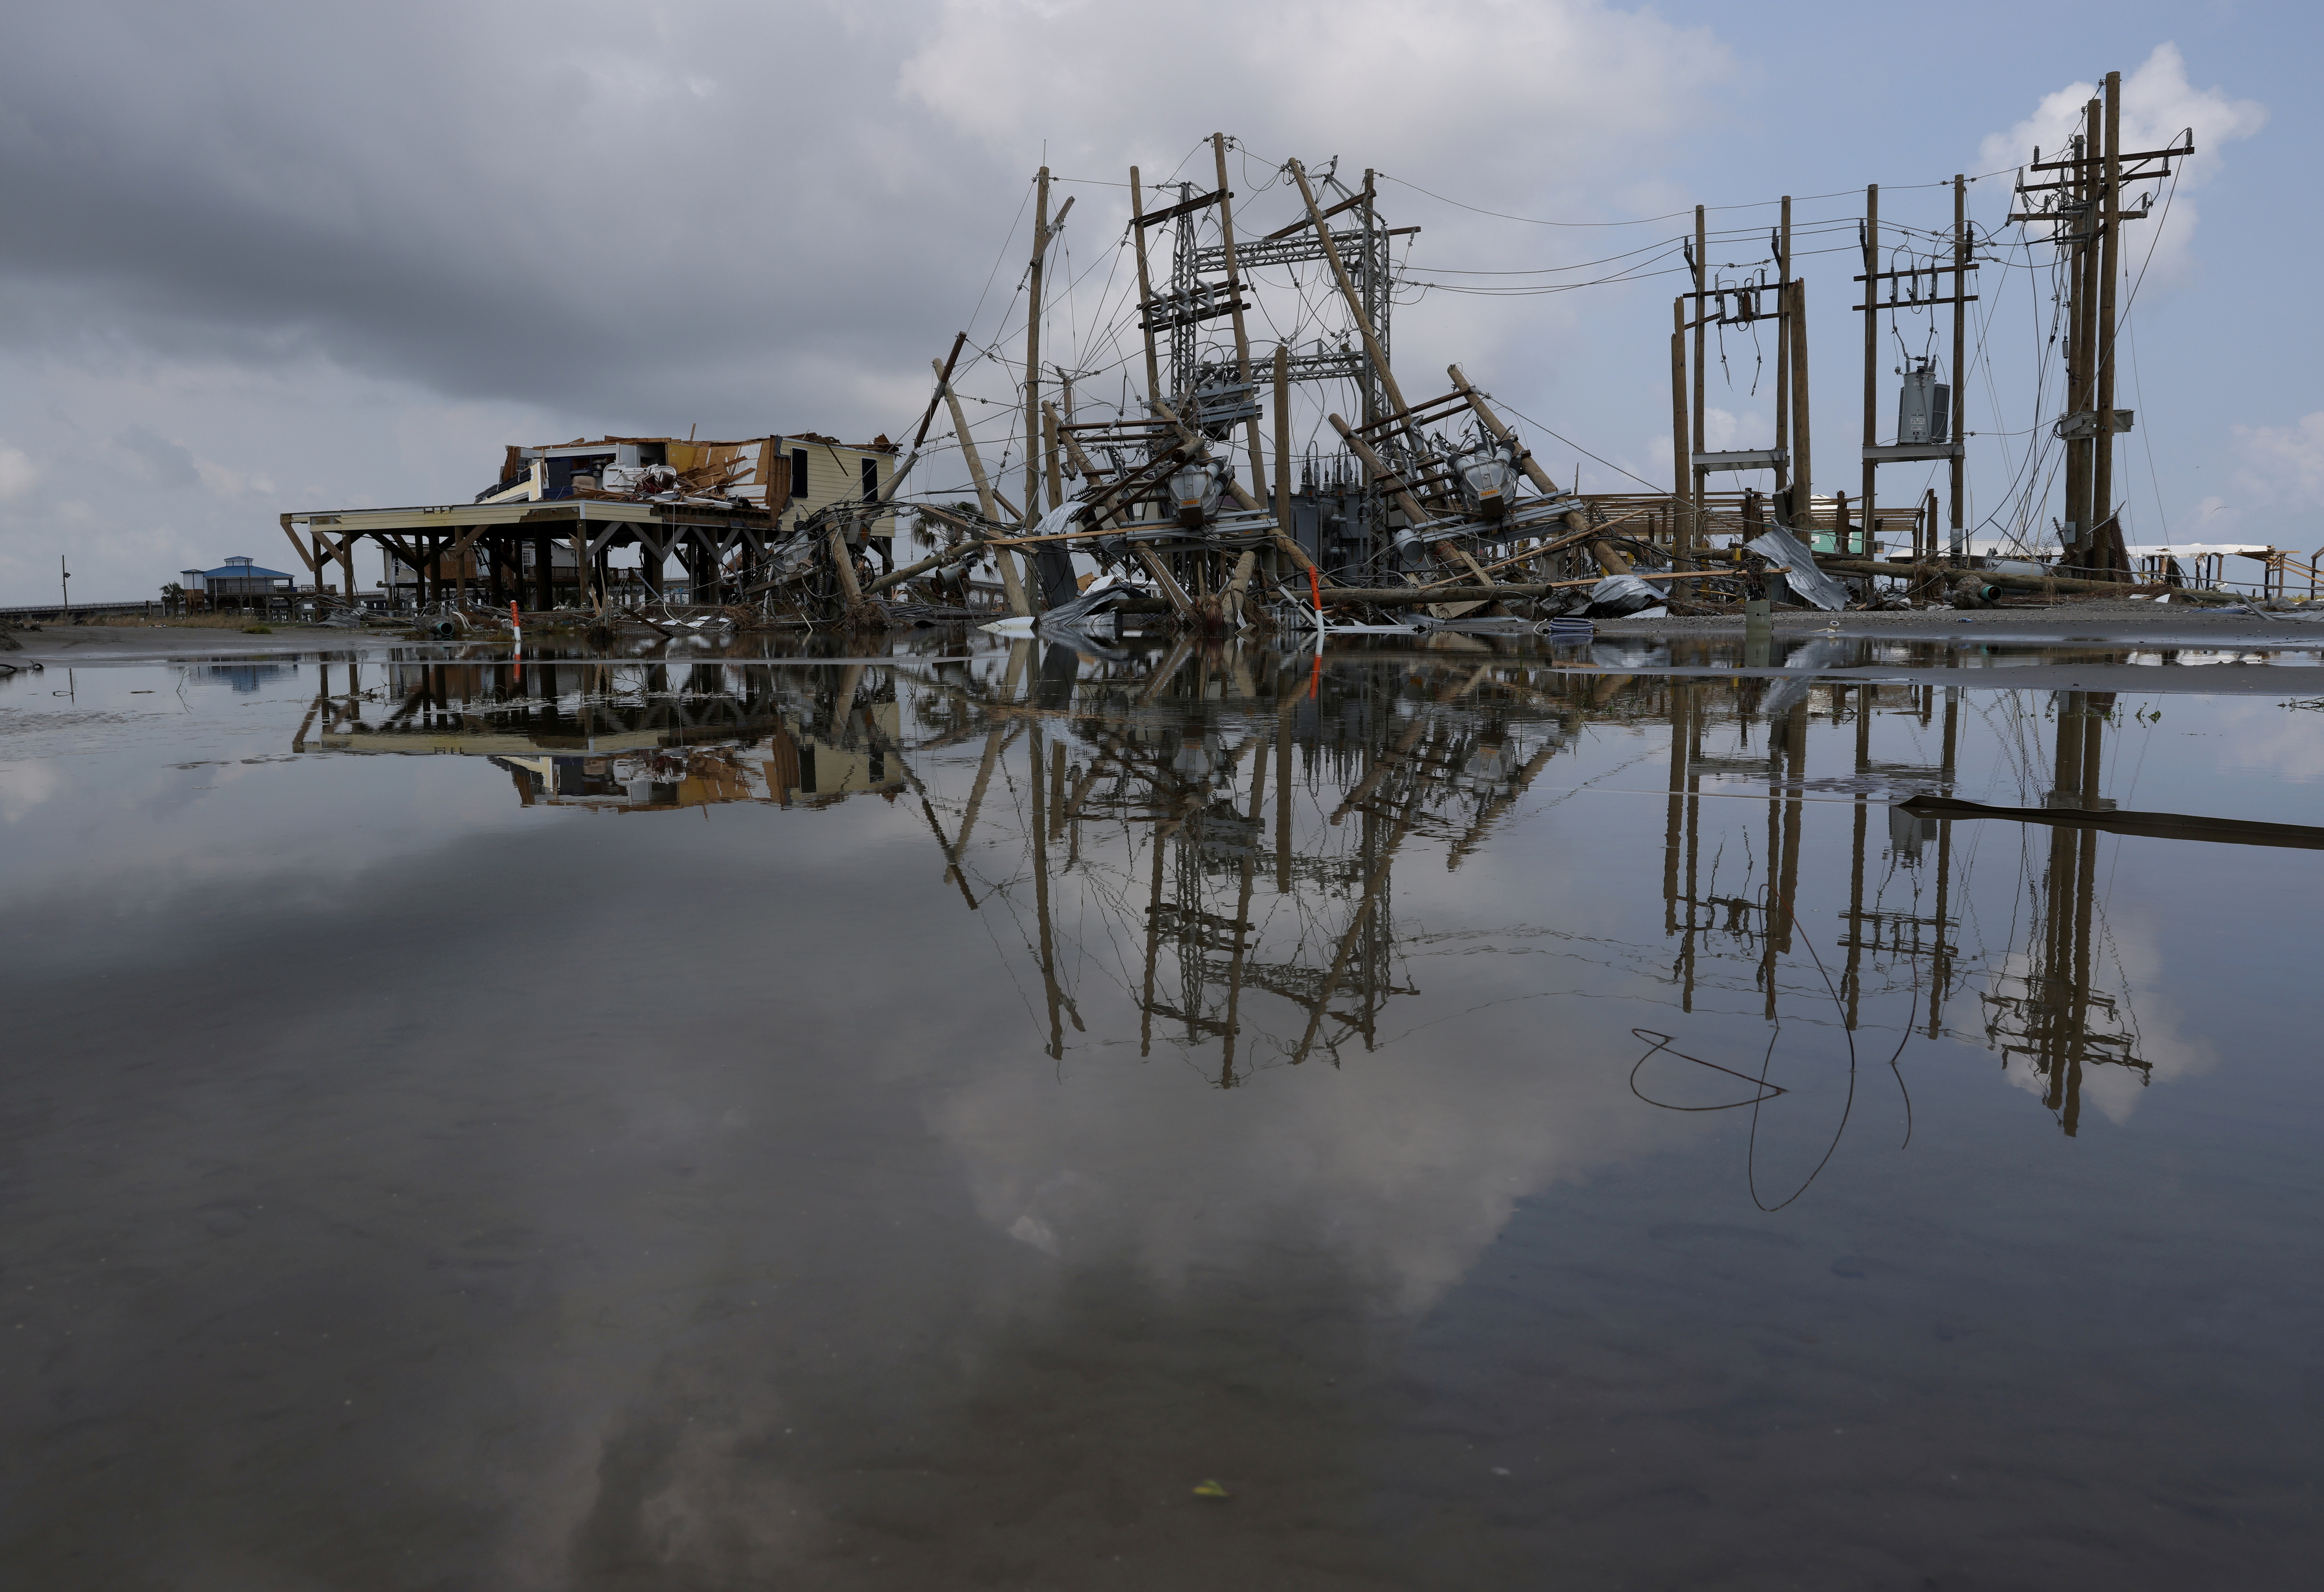 Scenes of the aftermath of hurricane Ida in Louisiana, U.S.